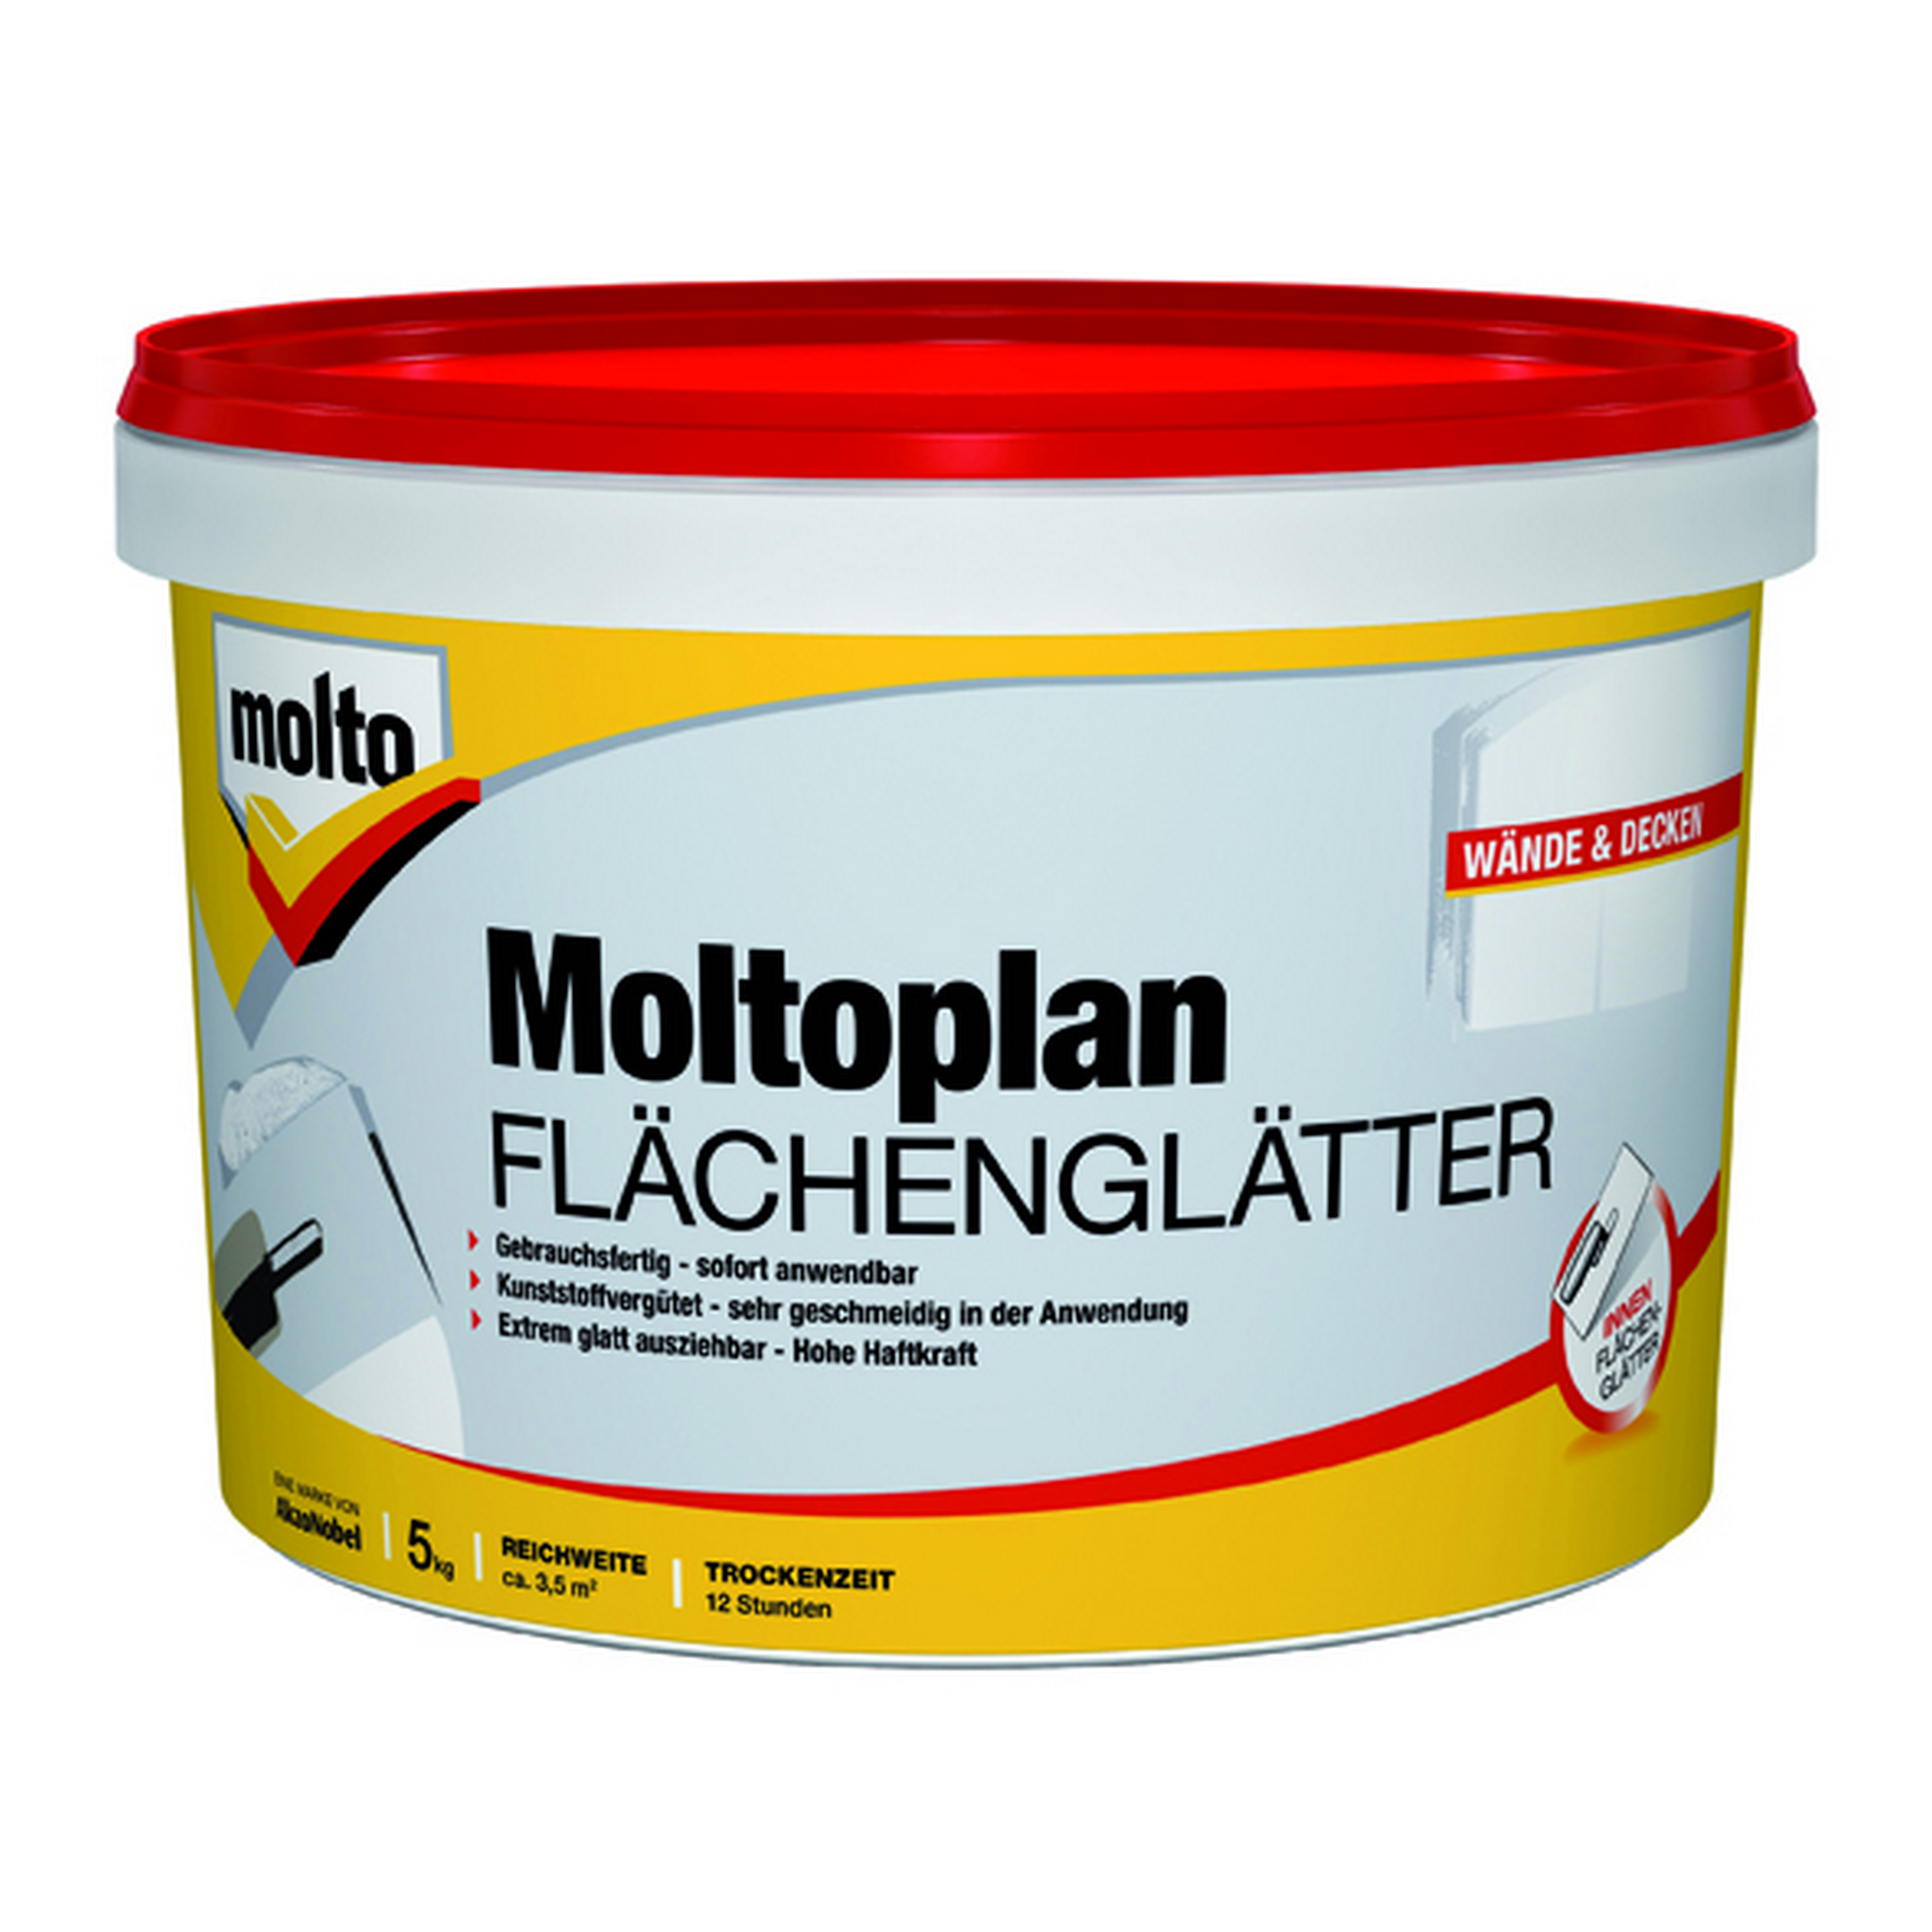 Flächenglätter 'Moltoplan' 5 kg + product picture